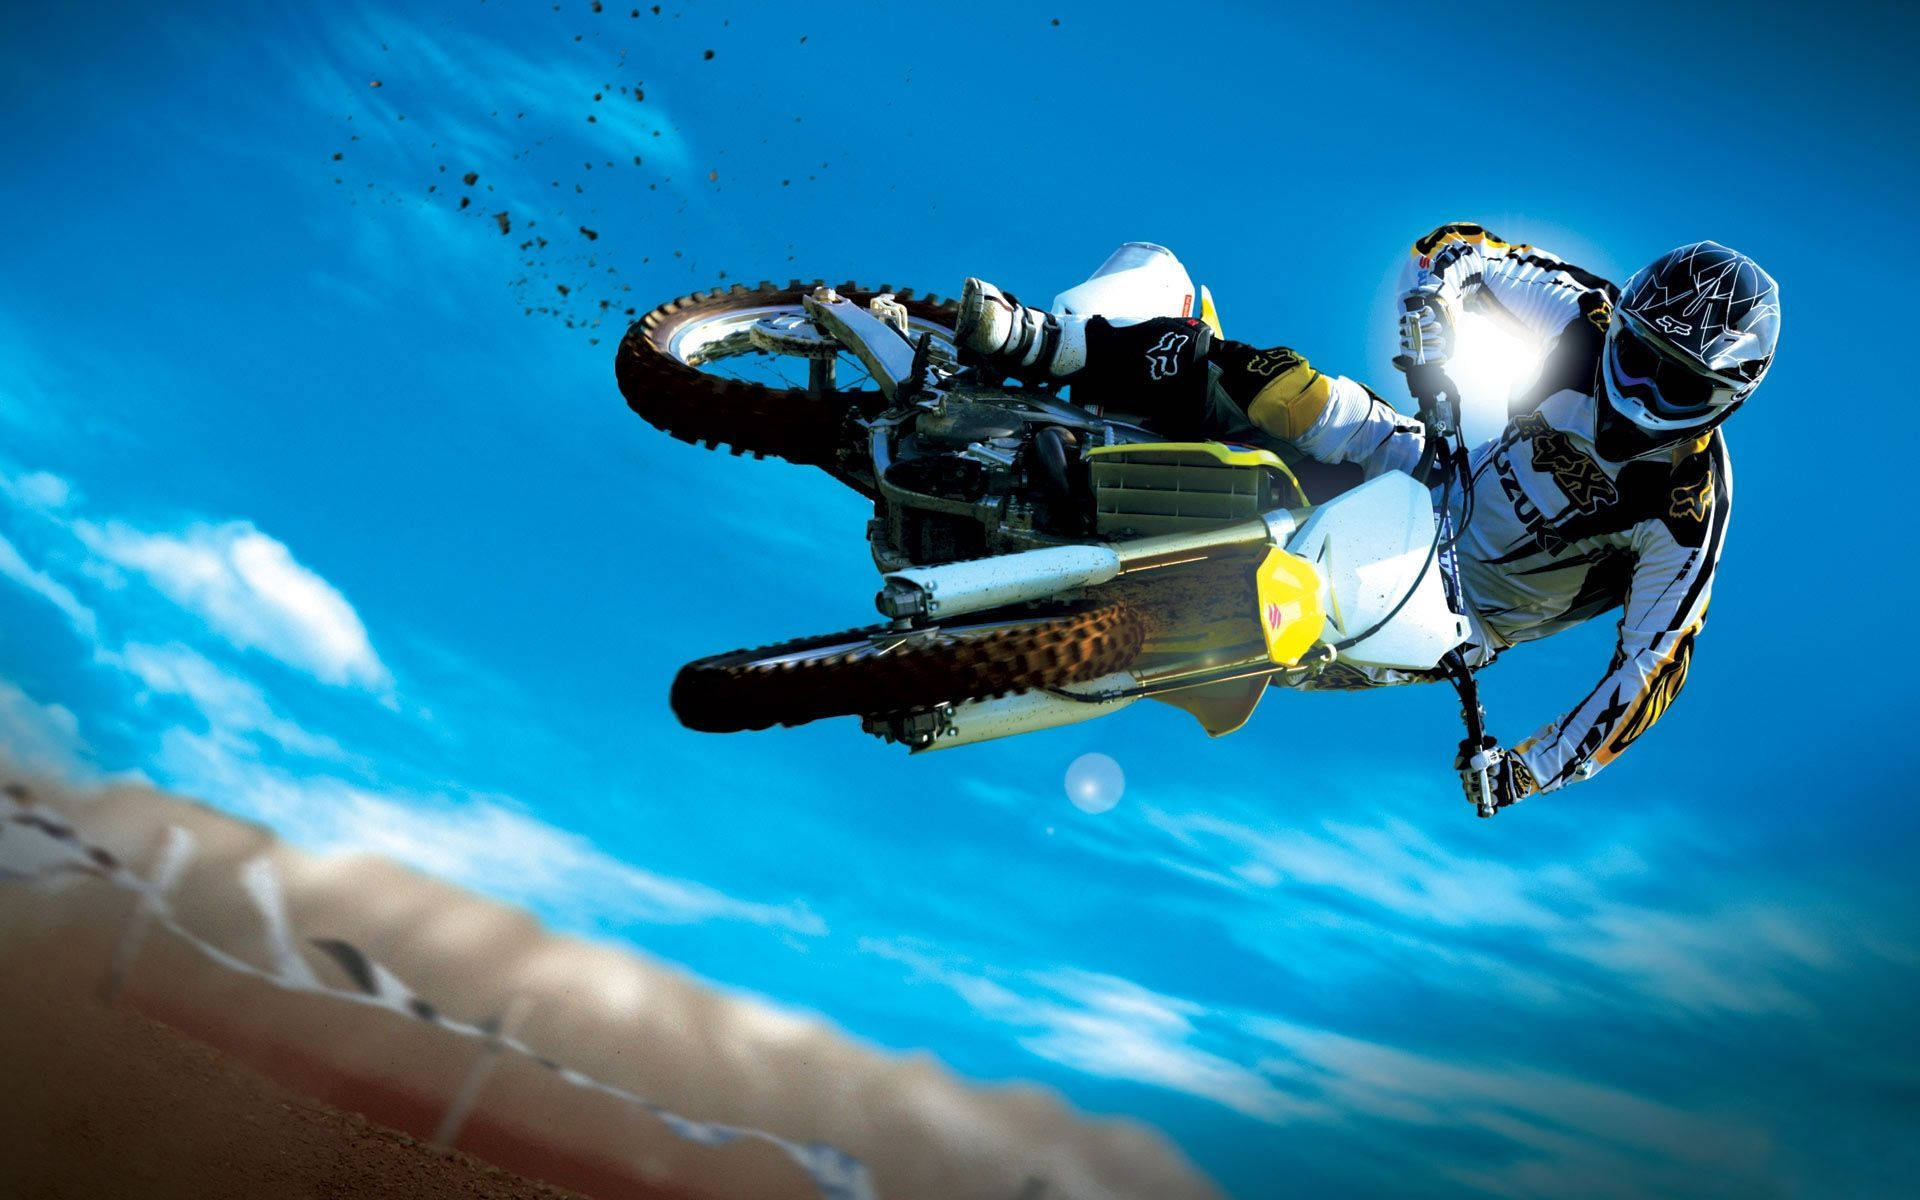 Motocross Sports Driver Realistic Illustration Background